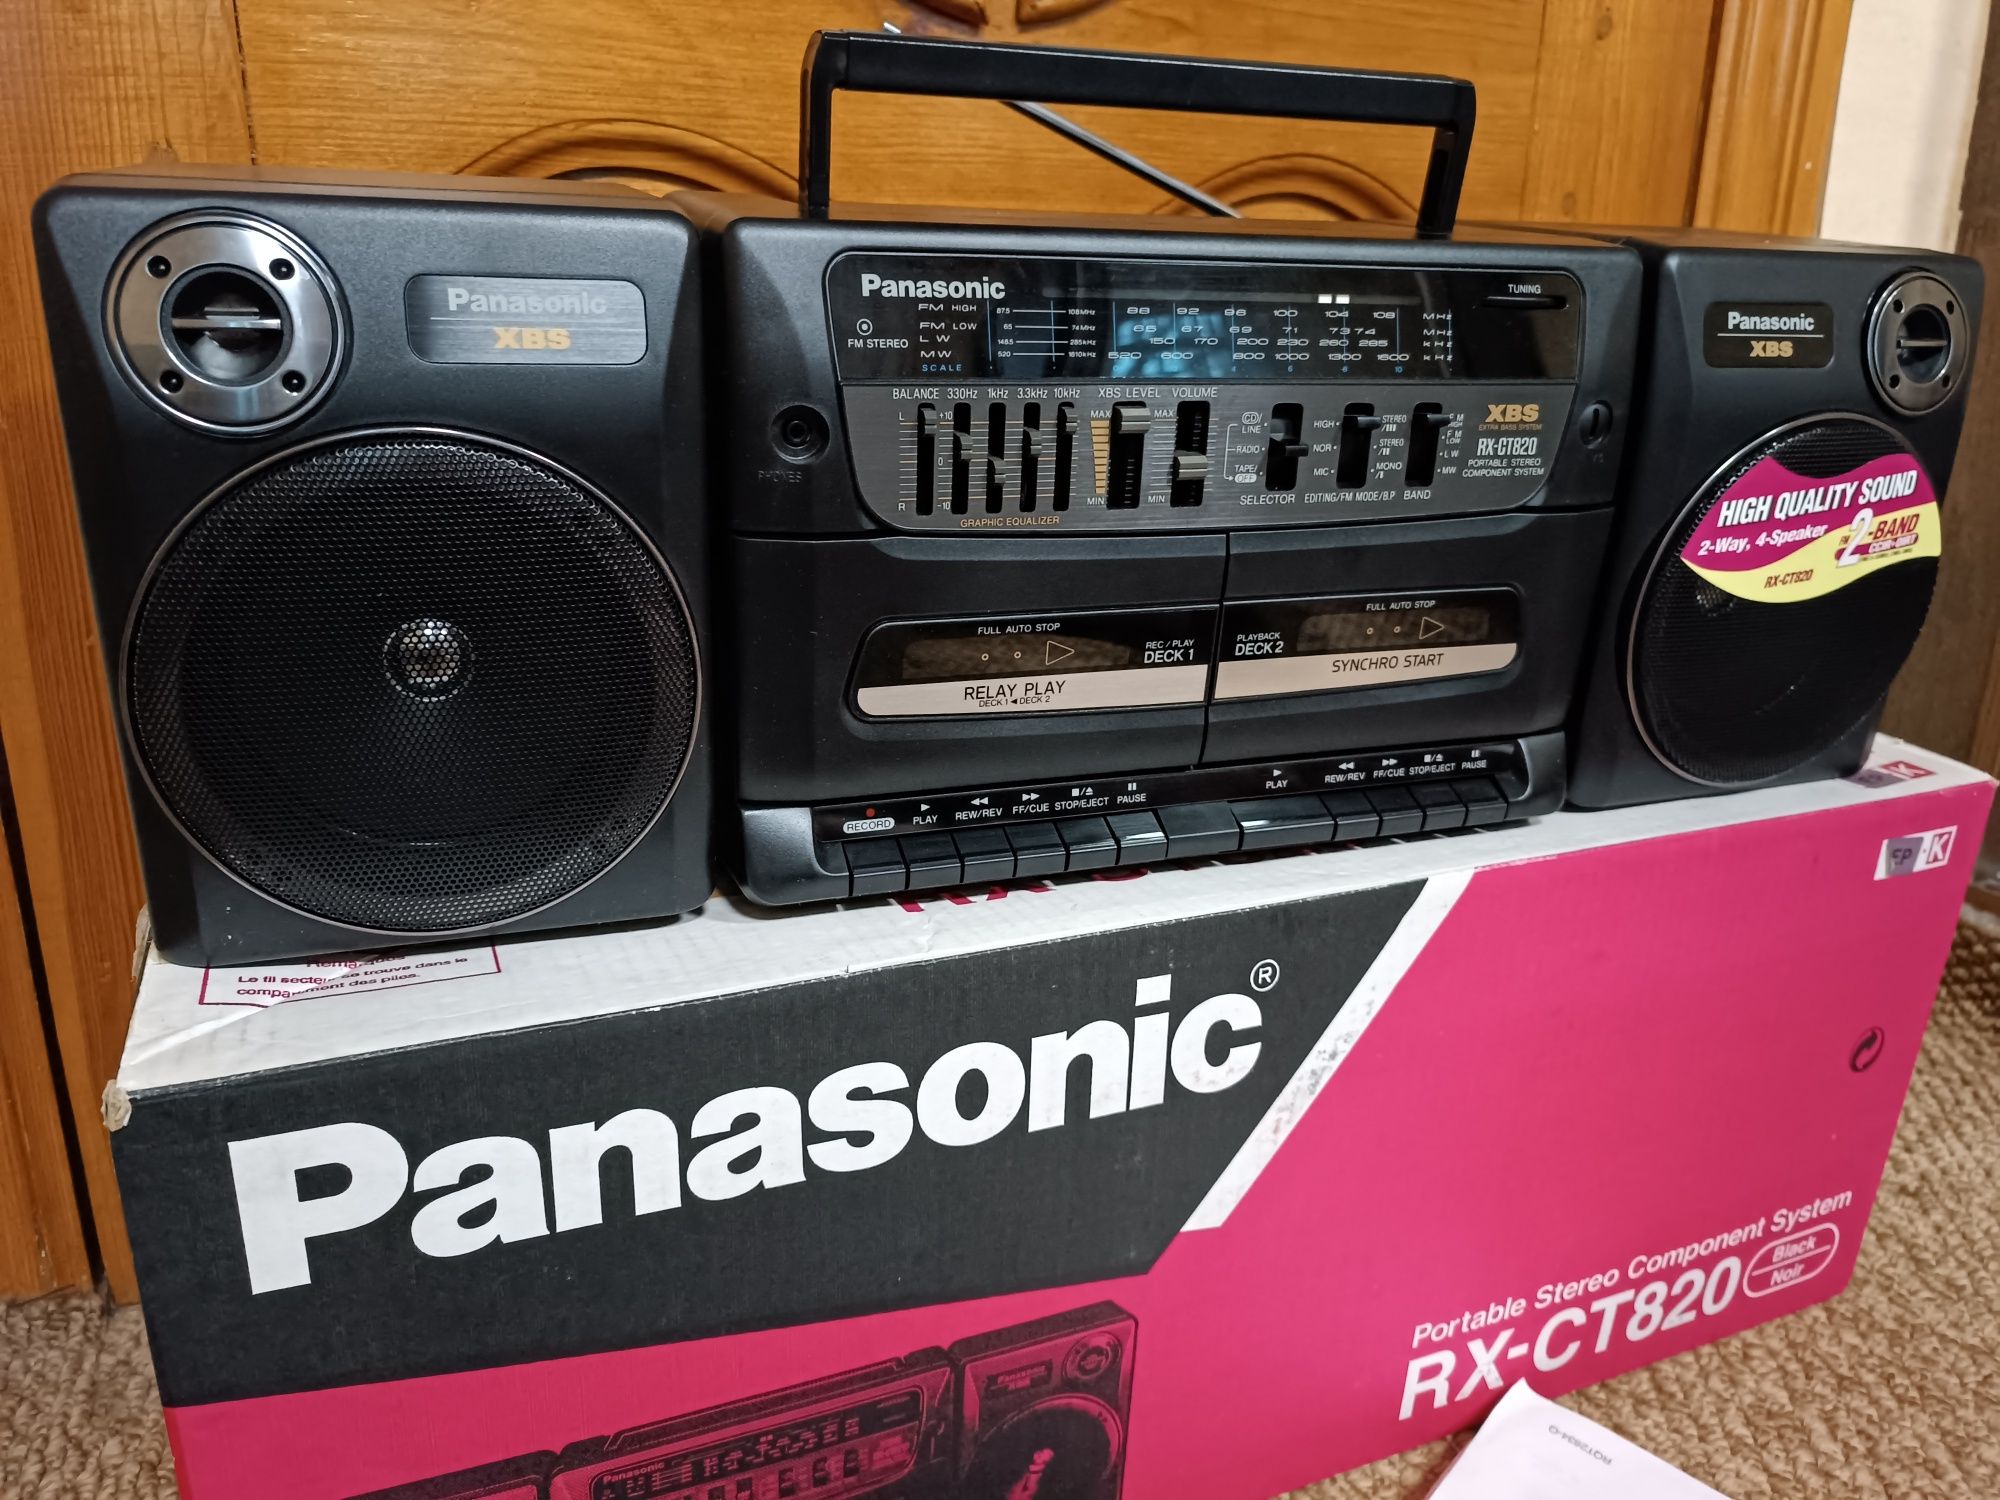 Panasonic rx ds 11 Panasonic rx ct 820